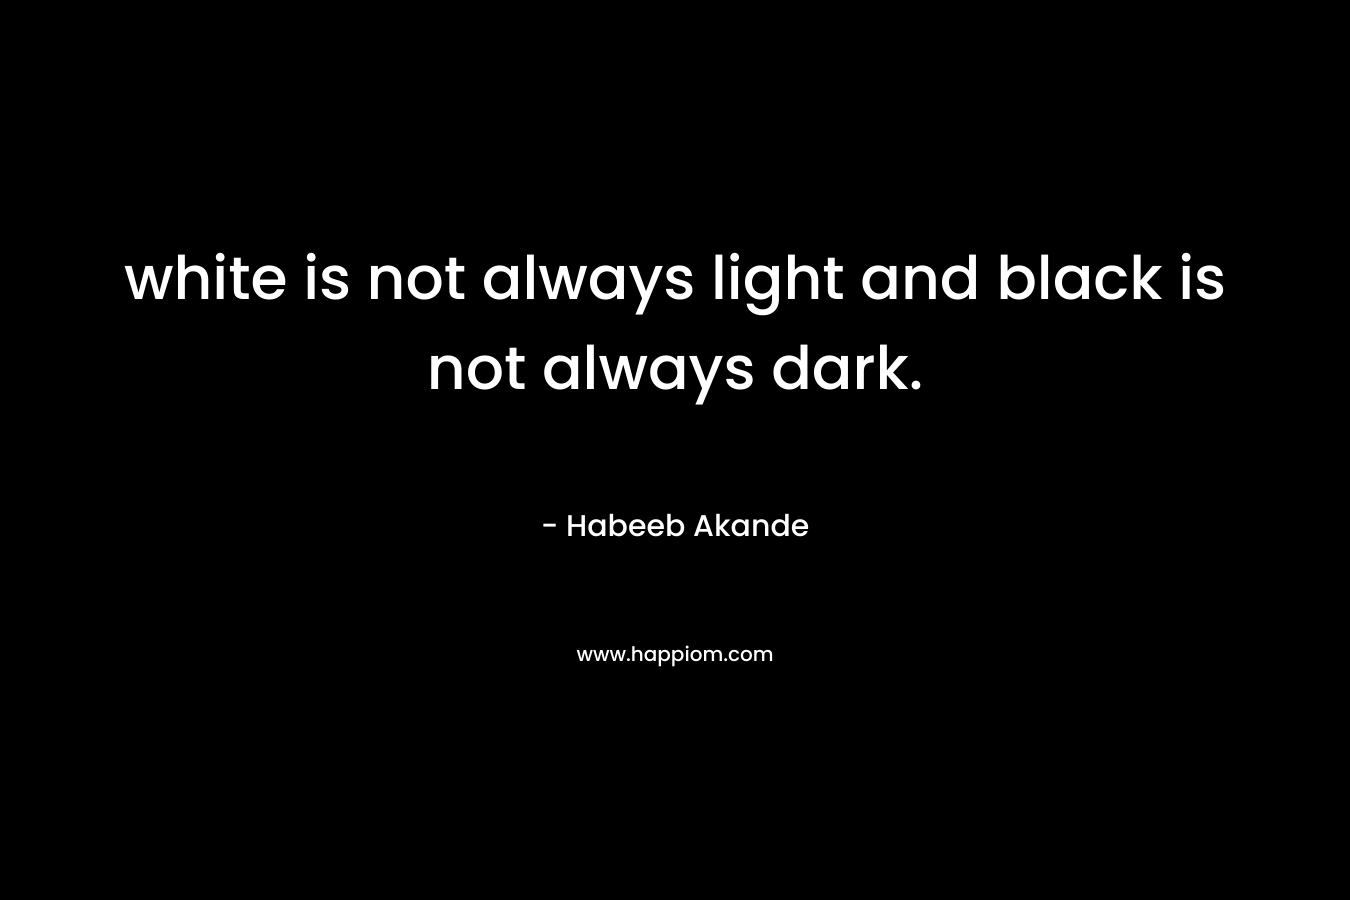 white is not always light and black is not always dark.